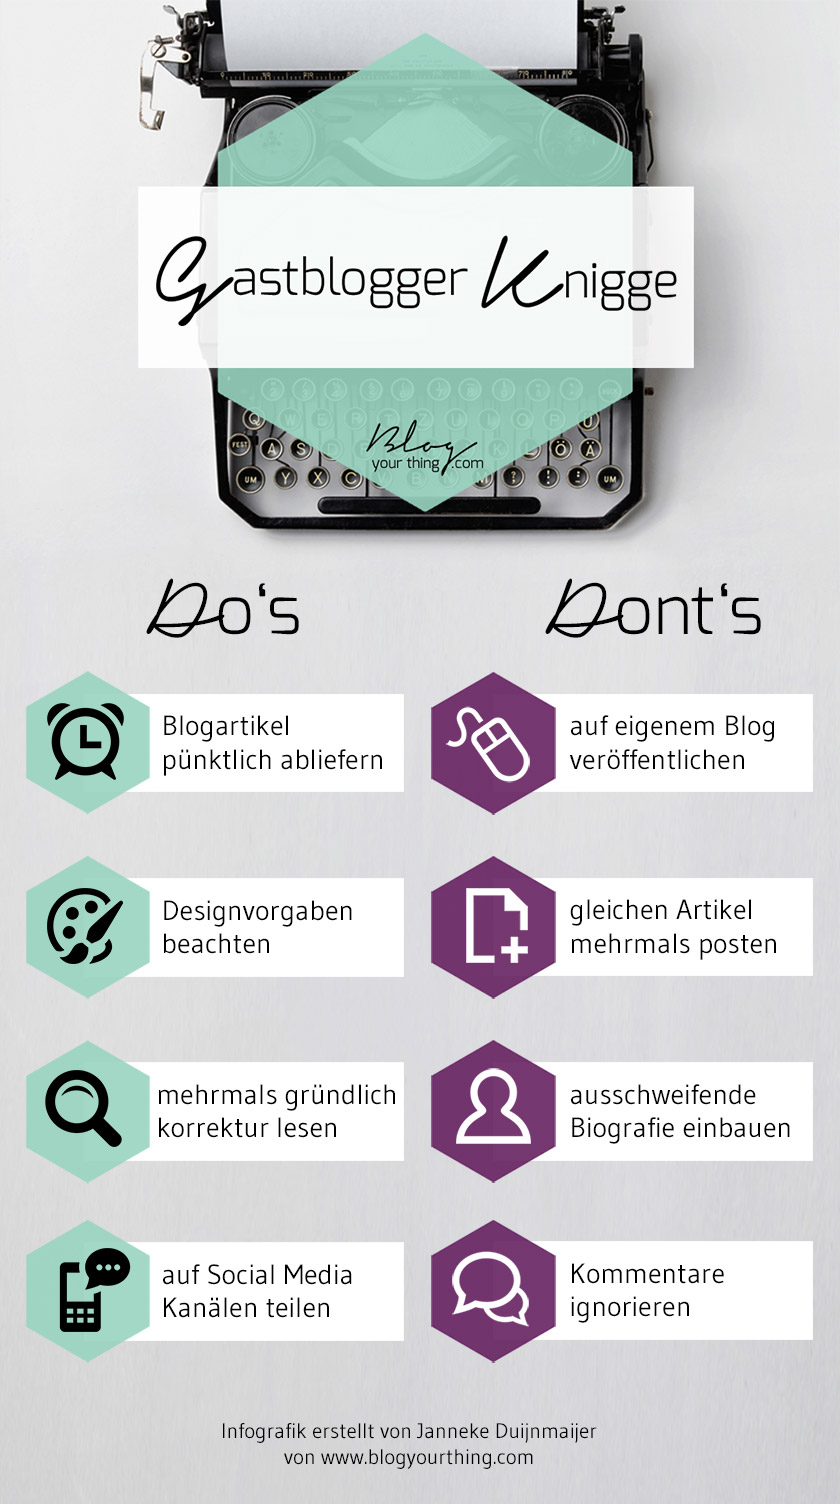 Gastblogger Knigge - Do's and Don'ts beim Gastbloggen - Infografik